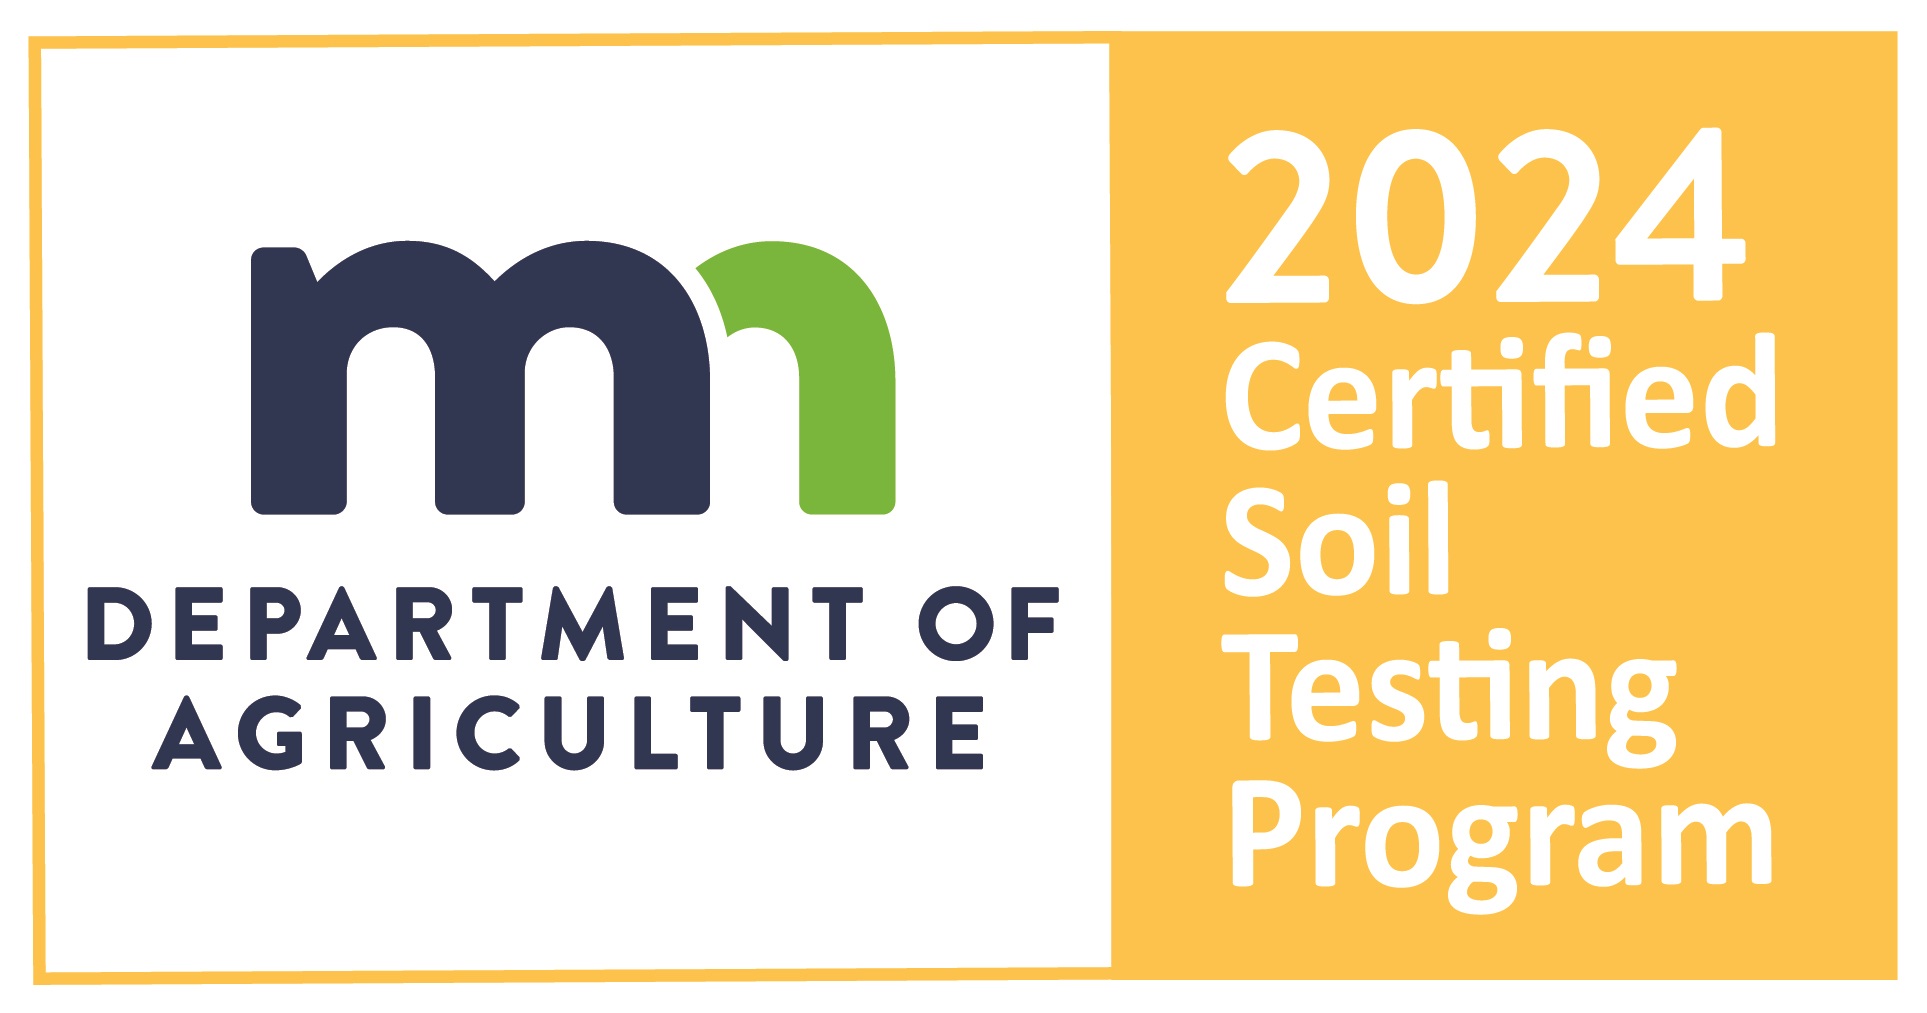 Minnesota Department of Agriculture 2024 Certified Soil Testing Program logo